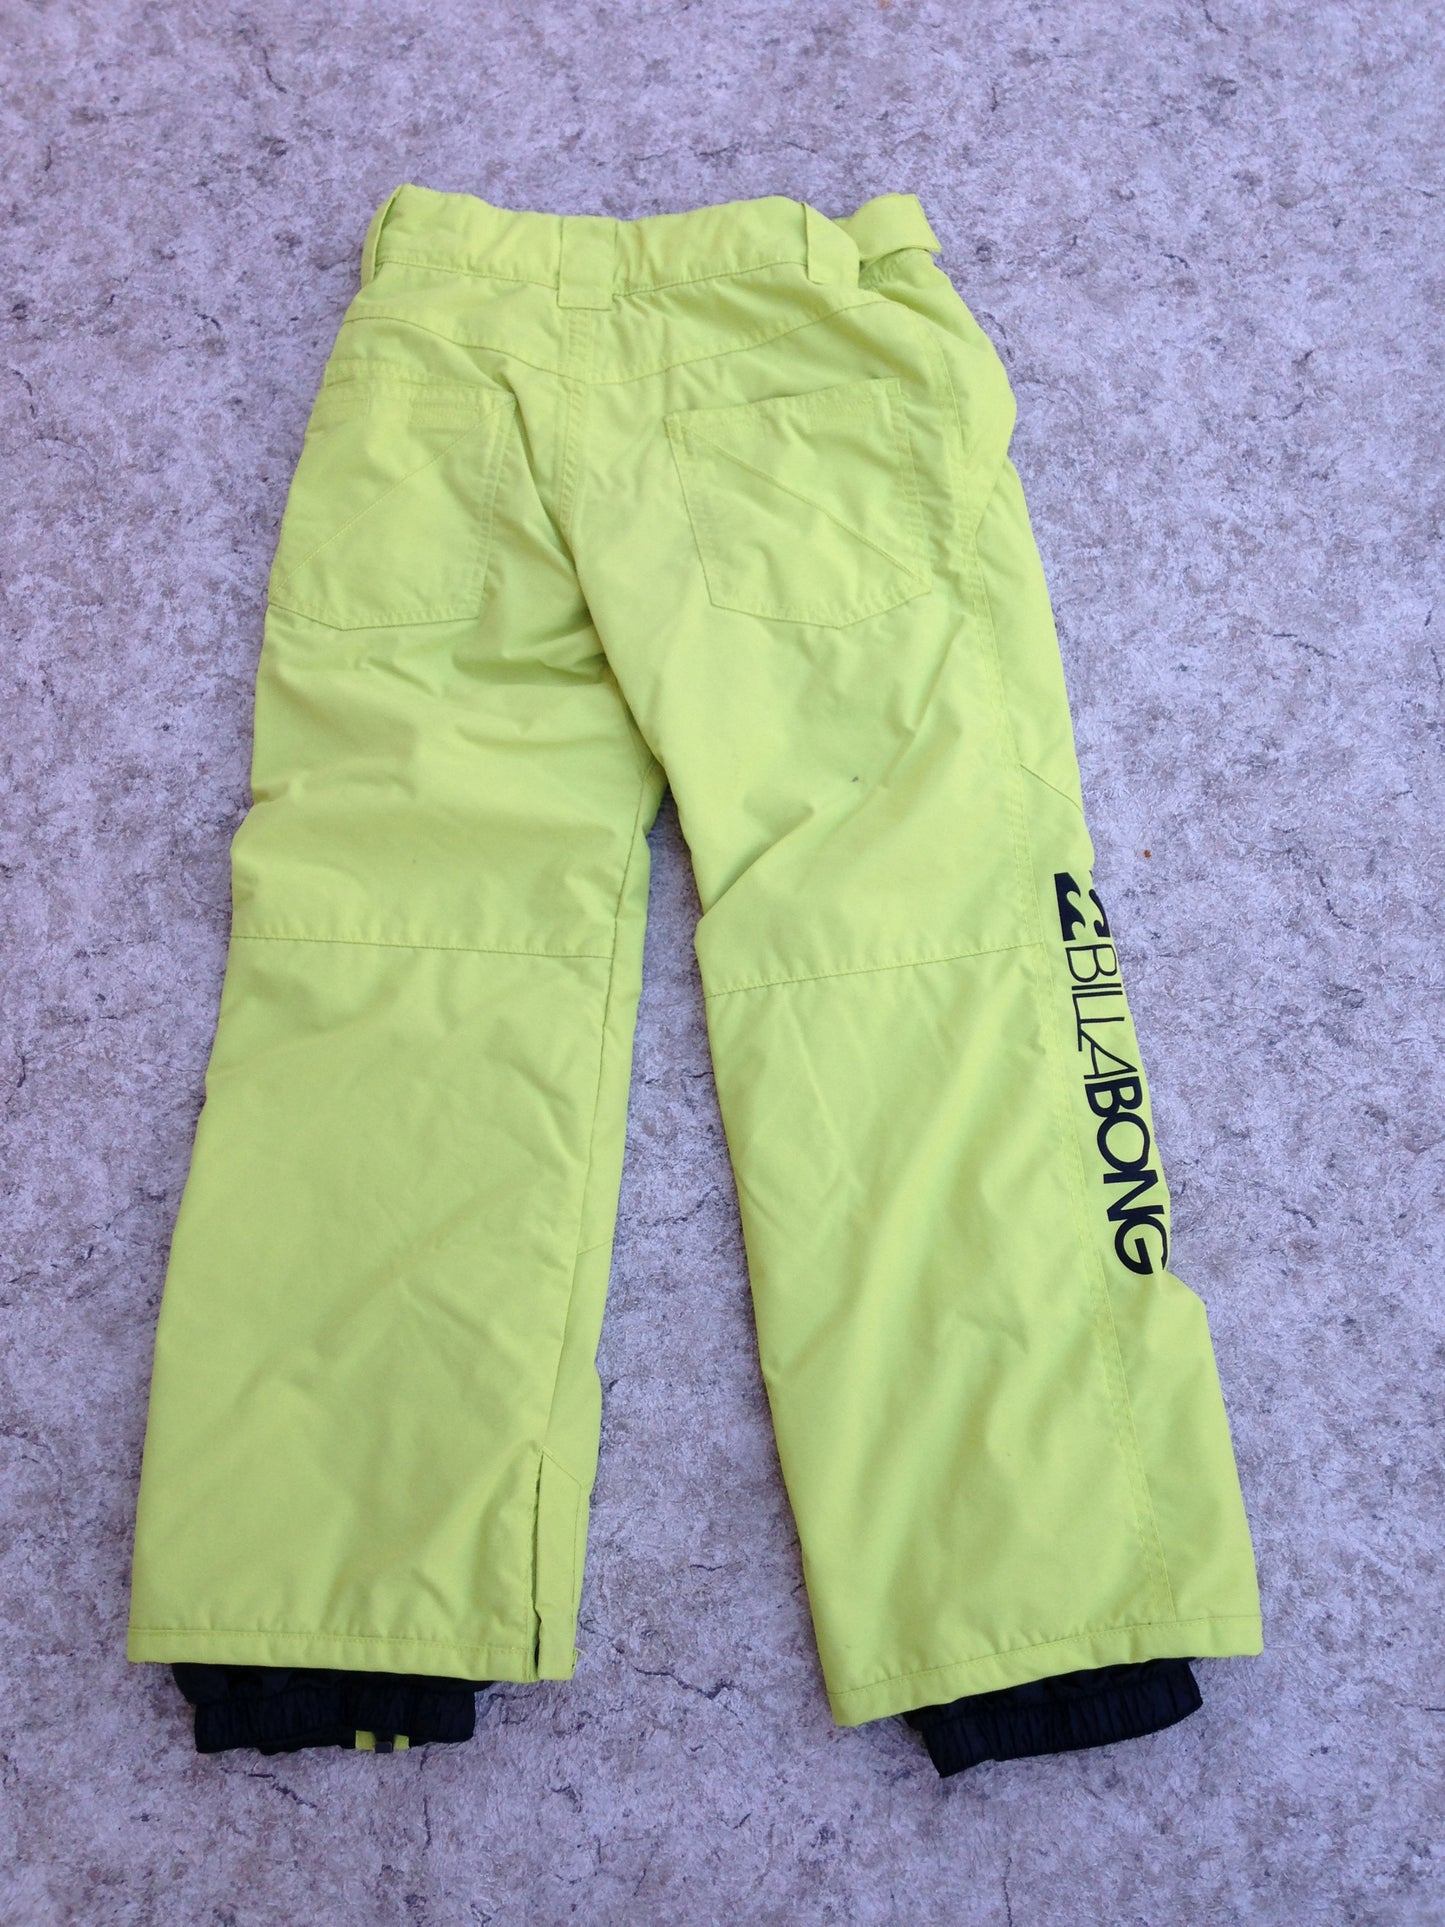 Snow Pants Child Size 10-12 Billabong Snowboarding Adjustable Waist Lime and Black New Demo Model